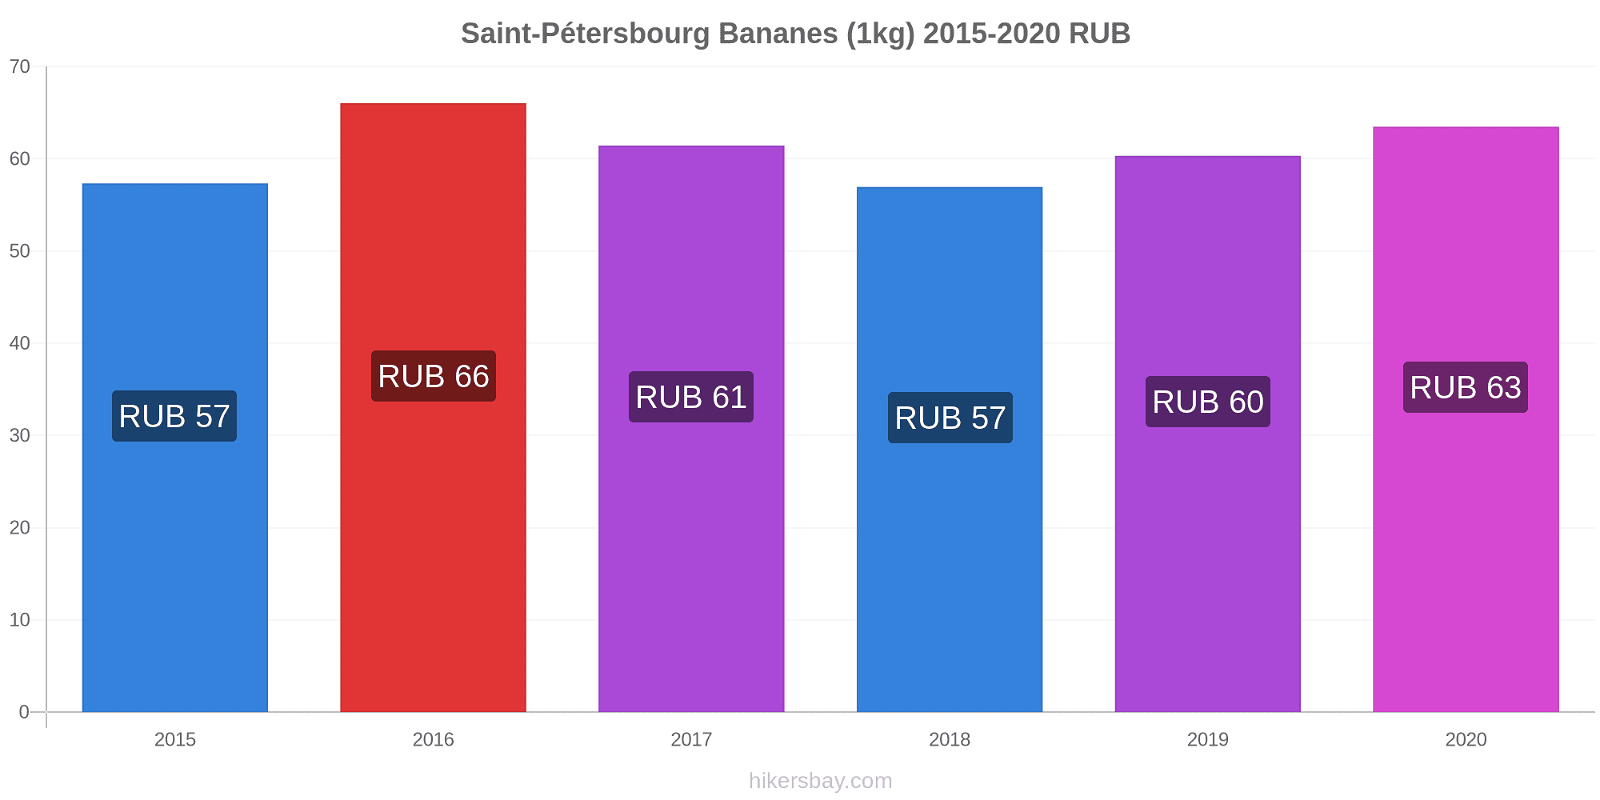 Saint-Pétersbourg changements de prix Bananes (1kg) hikersbay.com